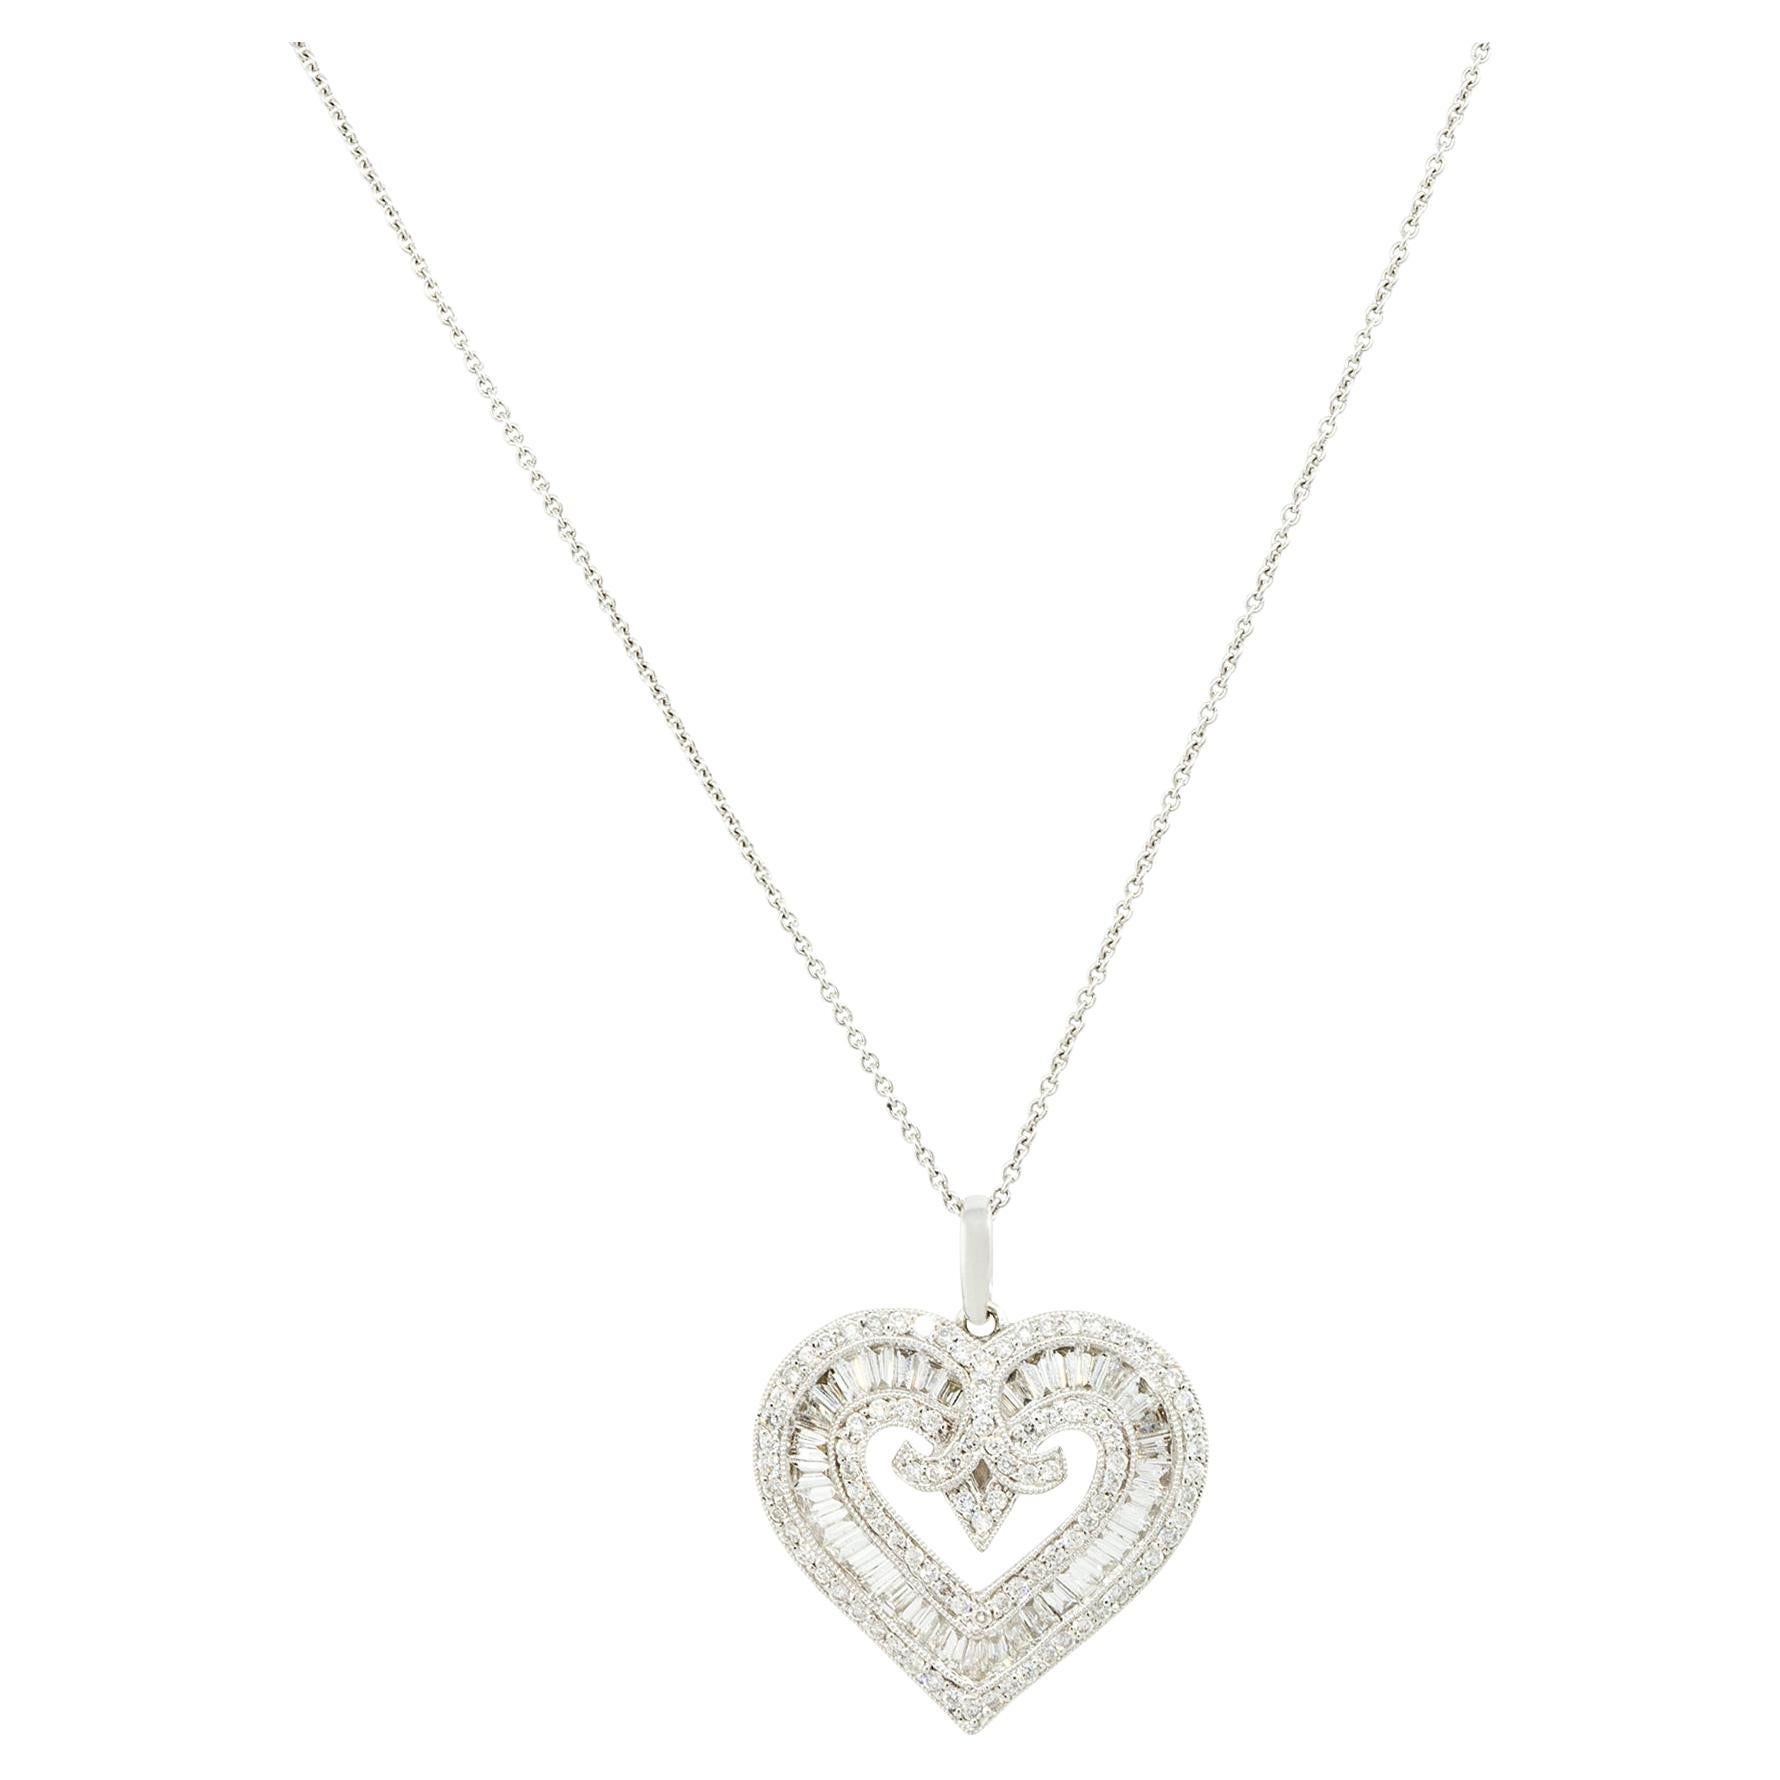 3.0 Carat Diamond Heart Necklace 18 Karat In Stock For Sale